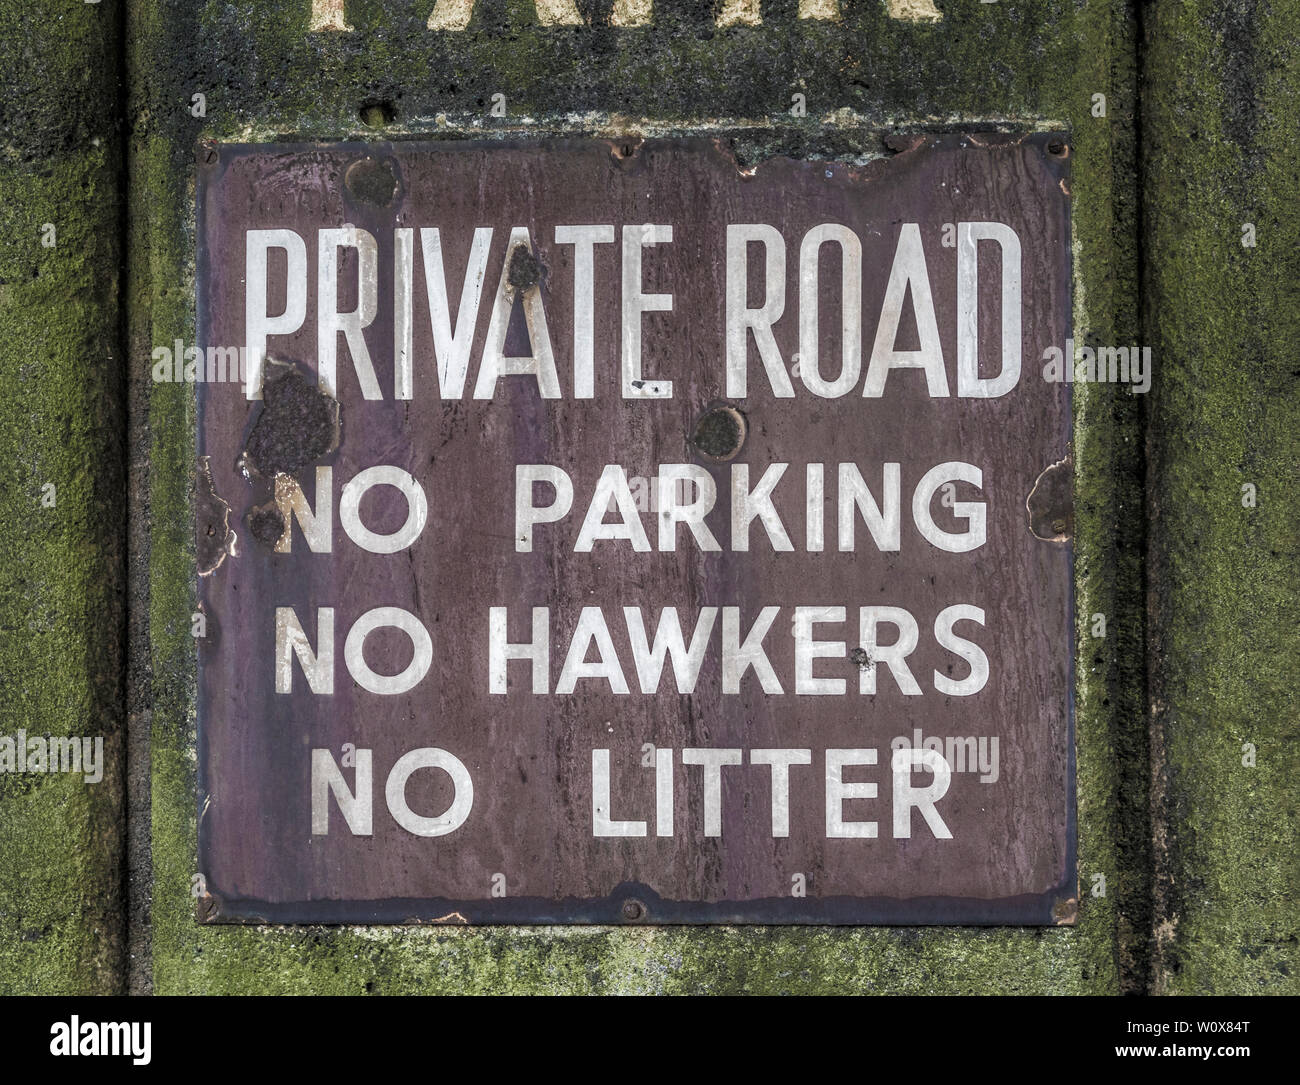 No Hawkers Shop or Business Door Sticker Sign 